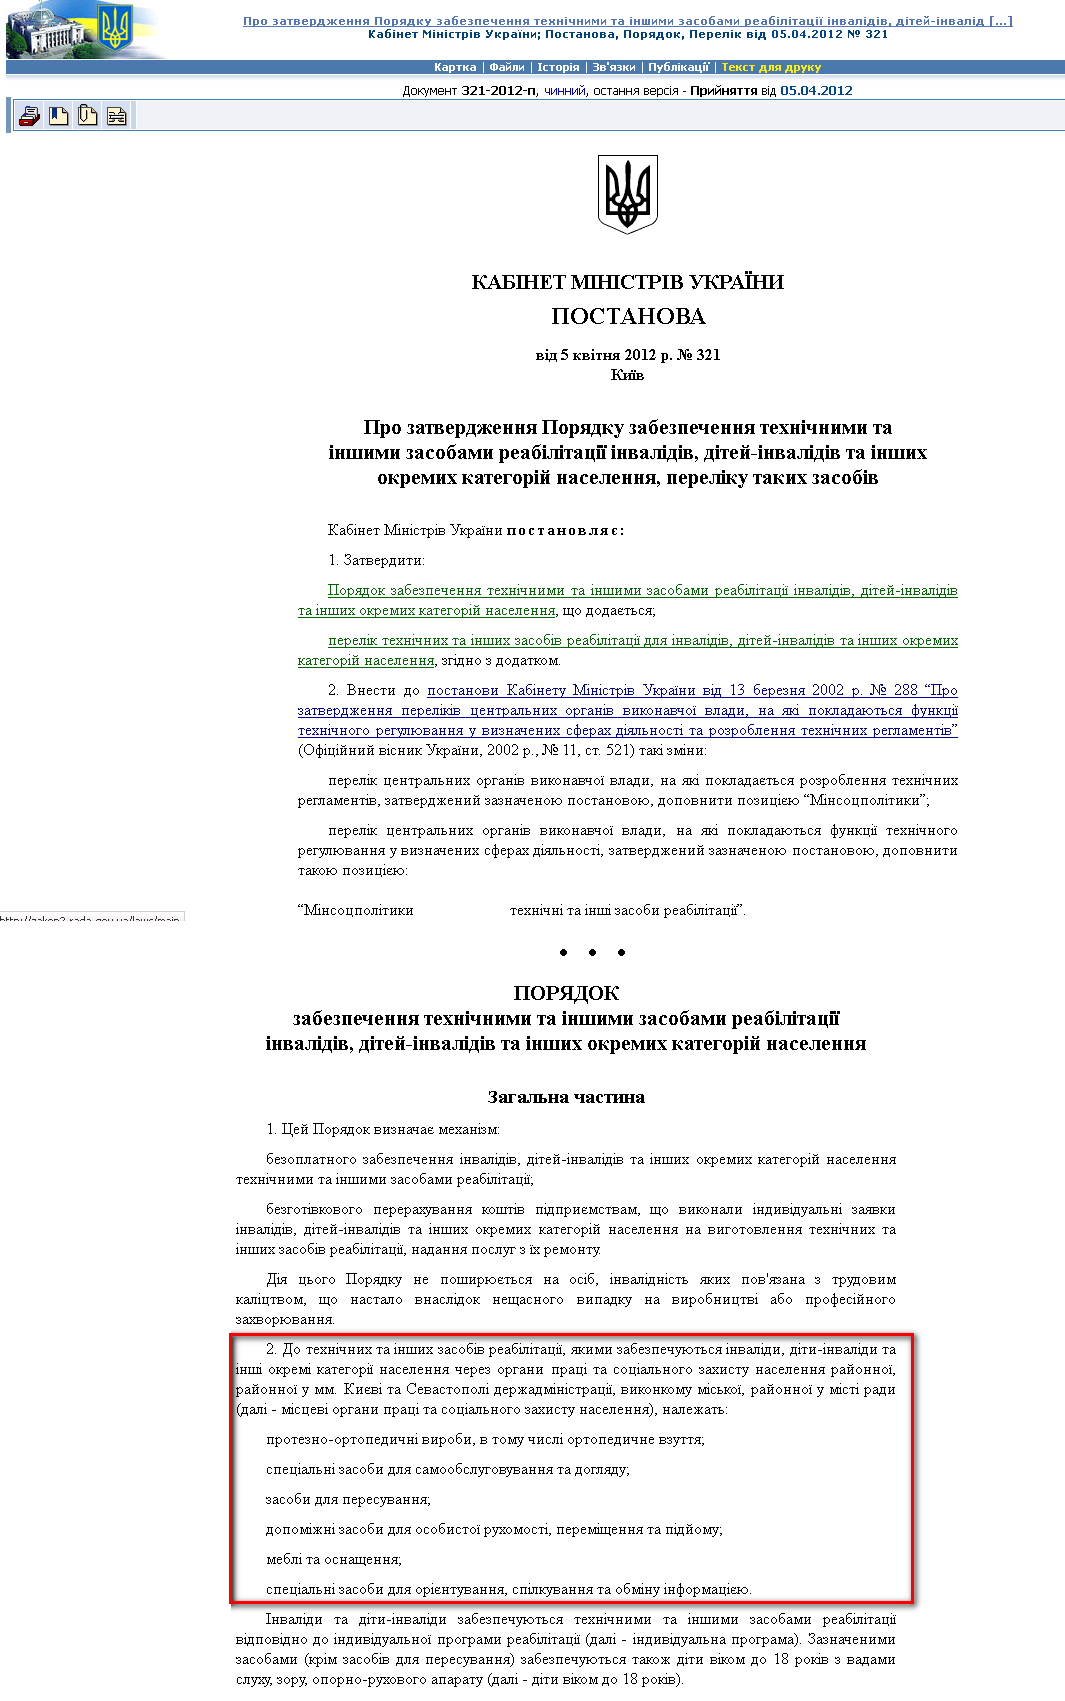 http://zakon2.rada.gov.ua/laws/show/321-2012-%D0%BF/page